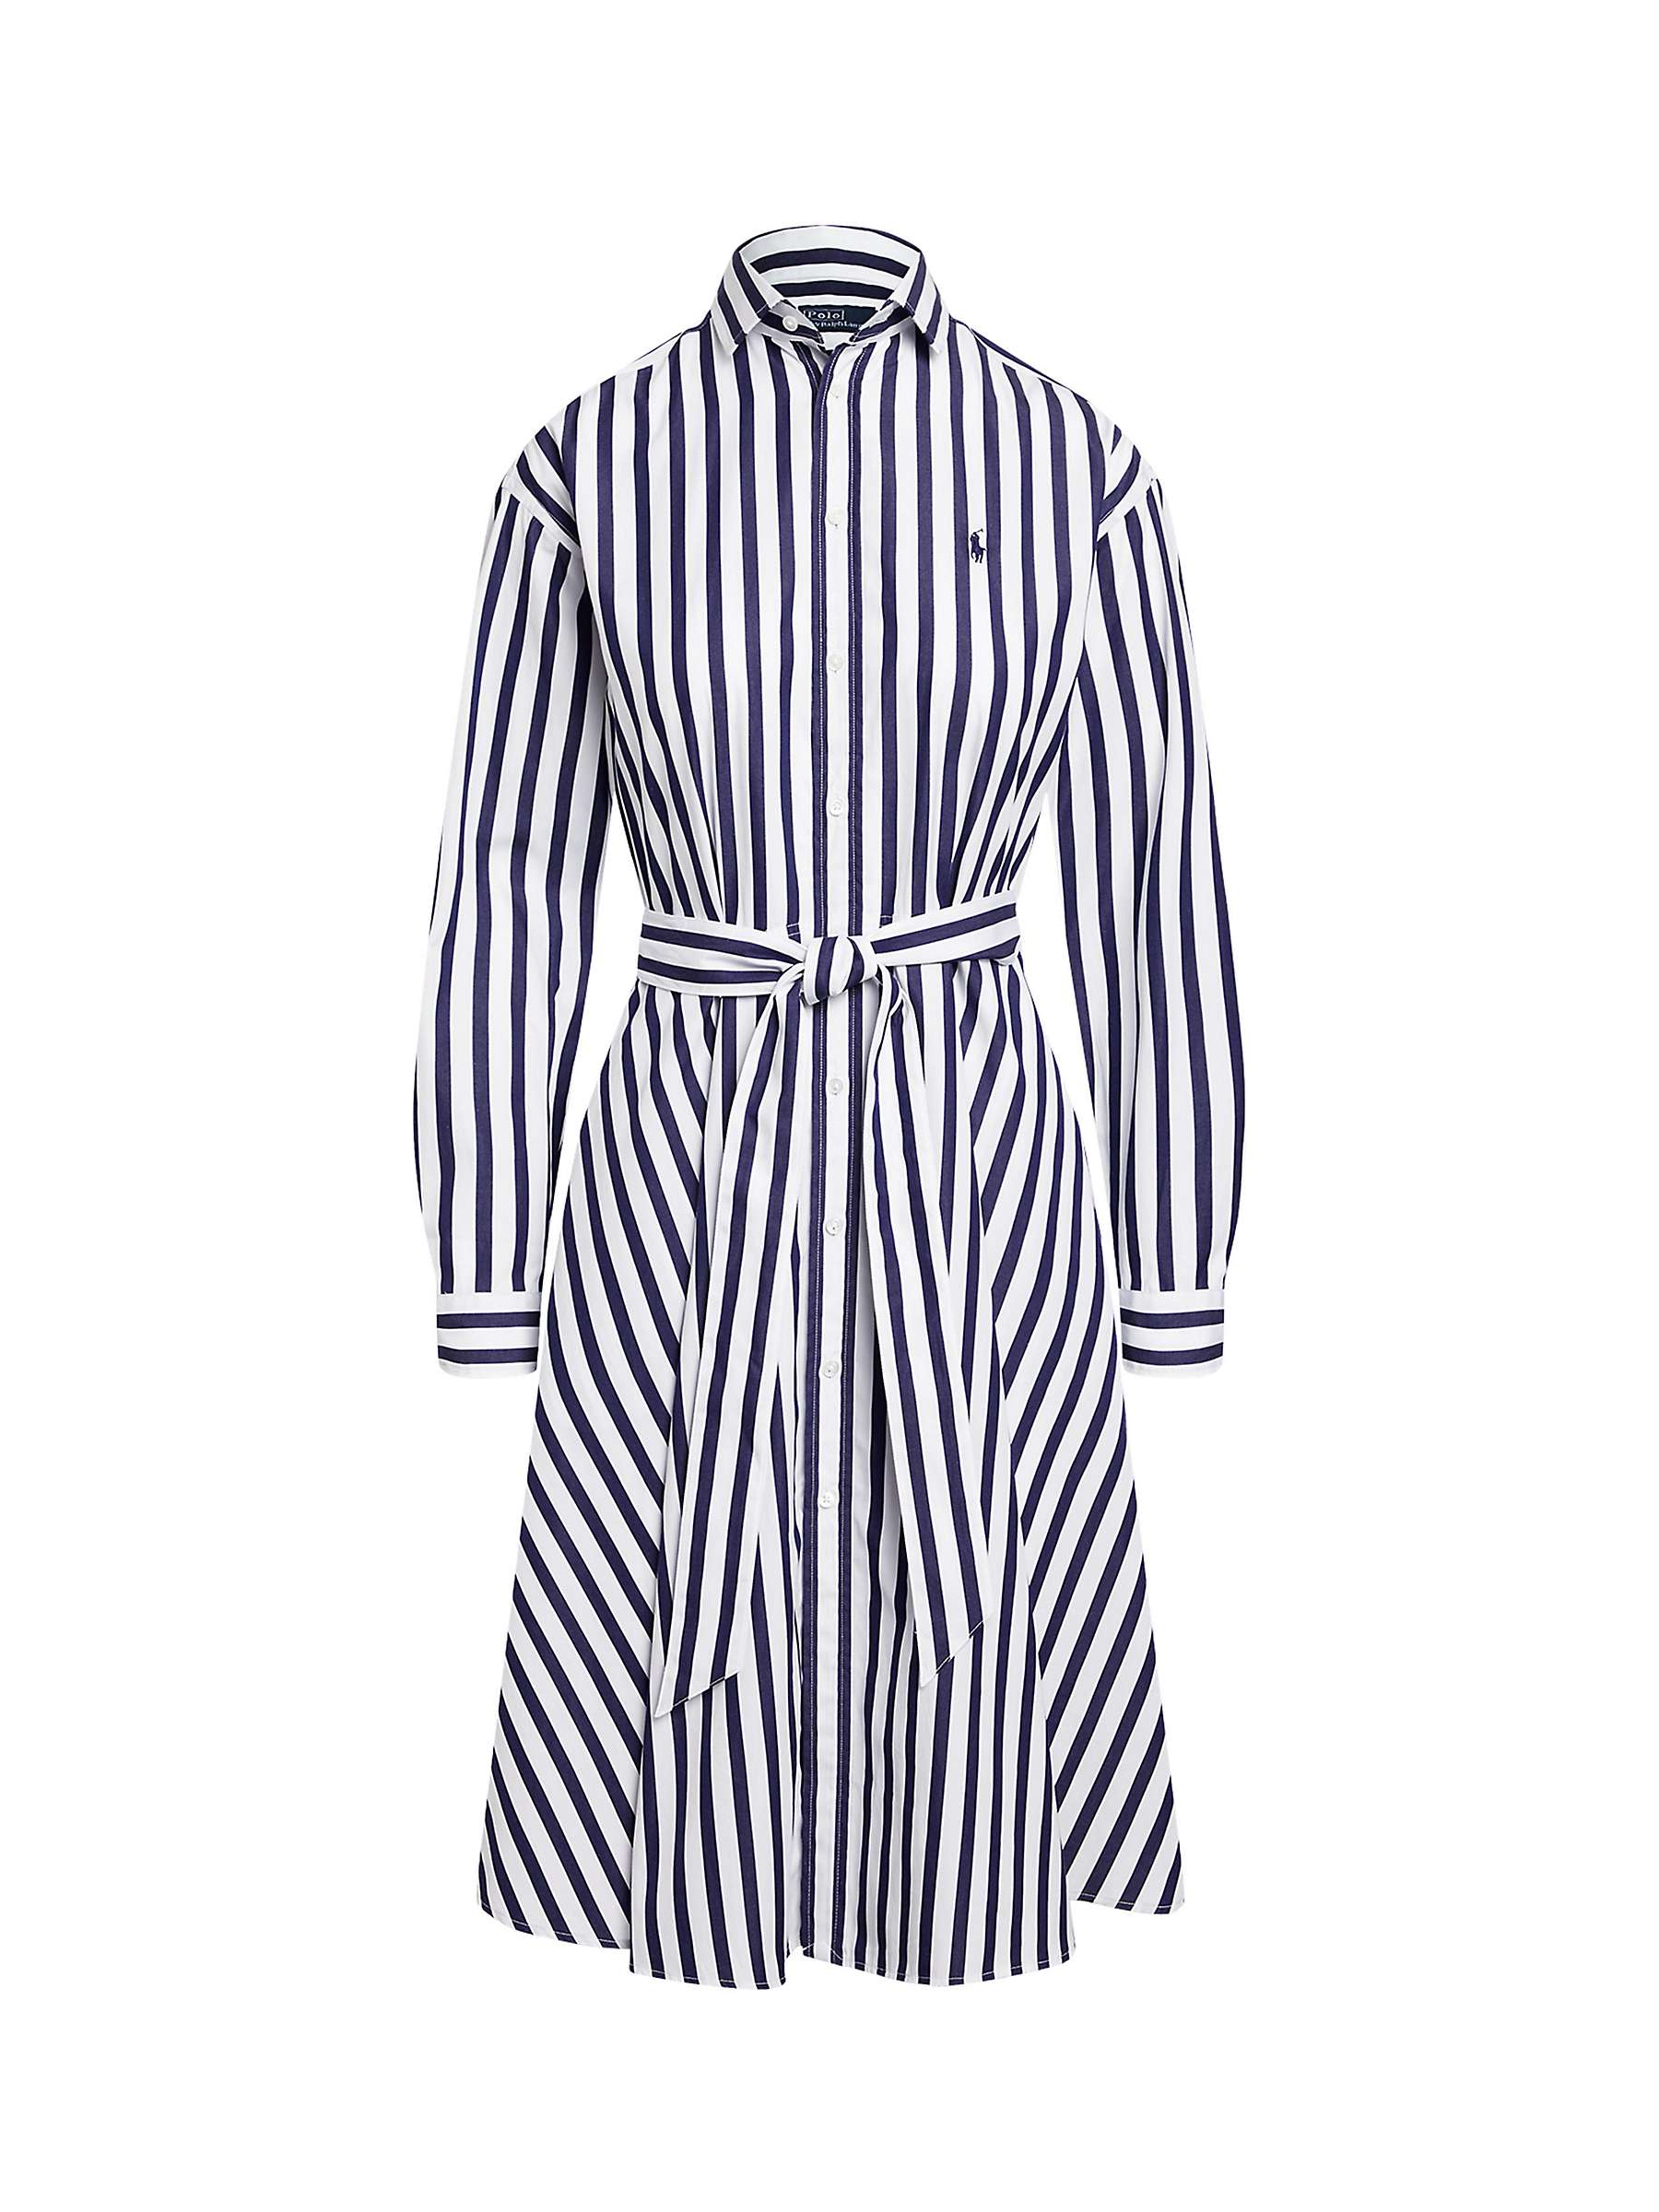 Buy Polo Ralph Lauren Stripe Pony Shirt Dress, Navy/White Online at johnlewis.com